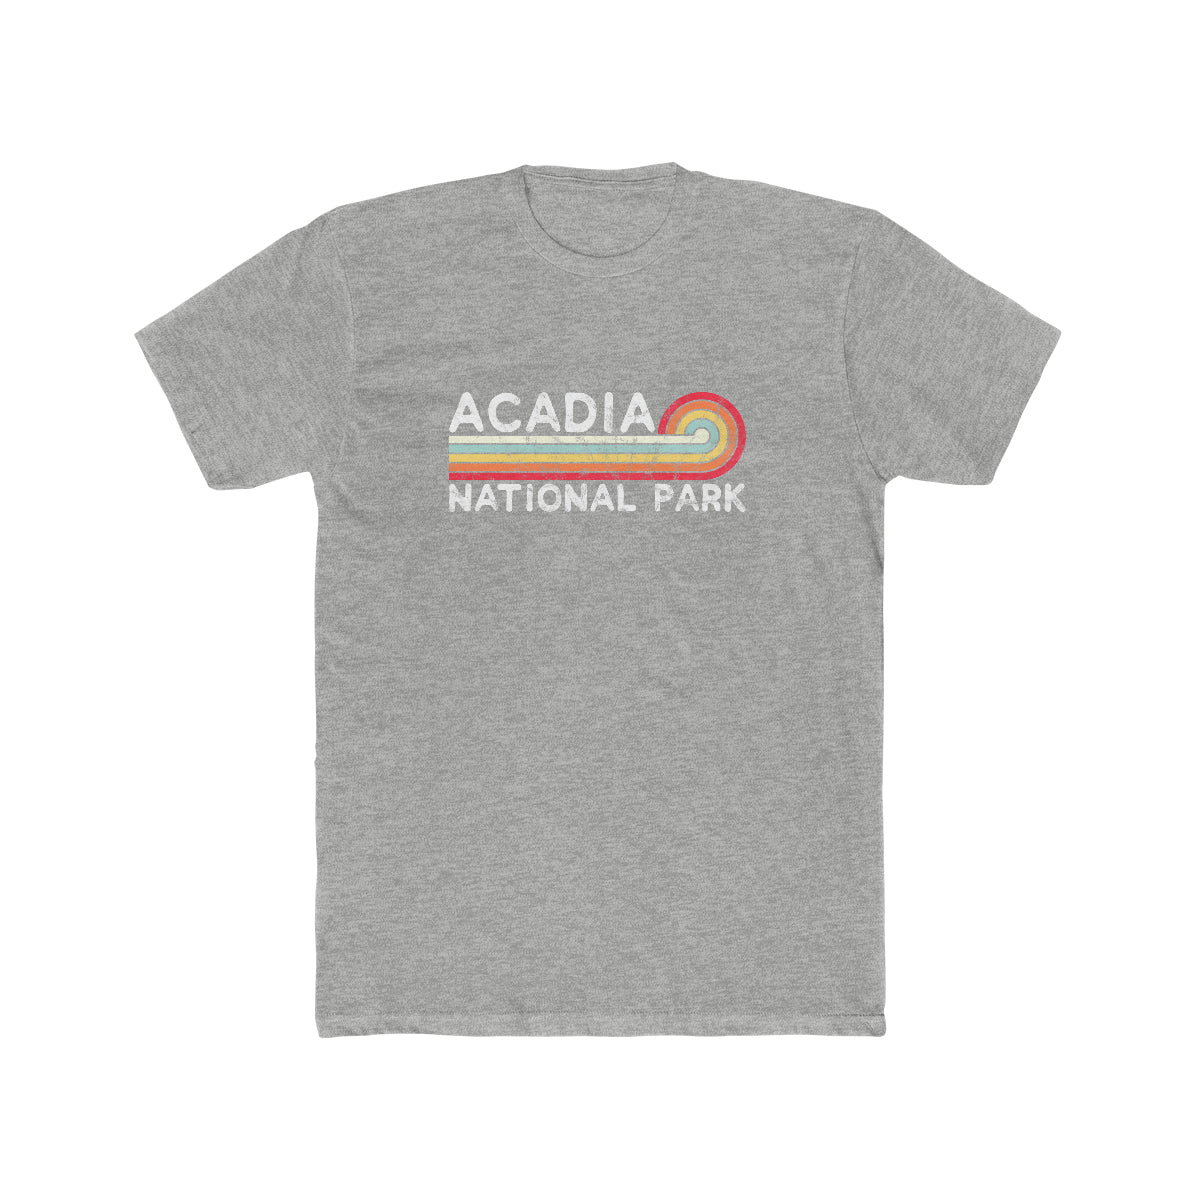 Acadia National Park T-Shirt - Vintage Stretched Sunrise